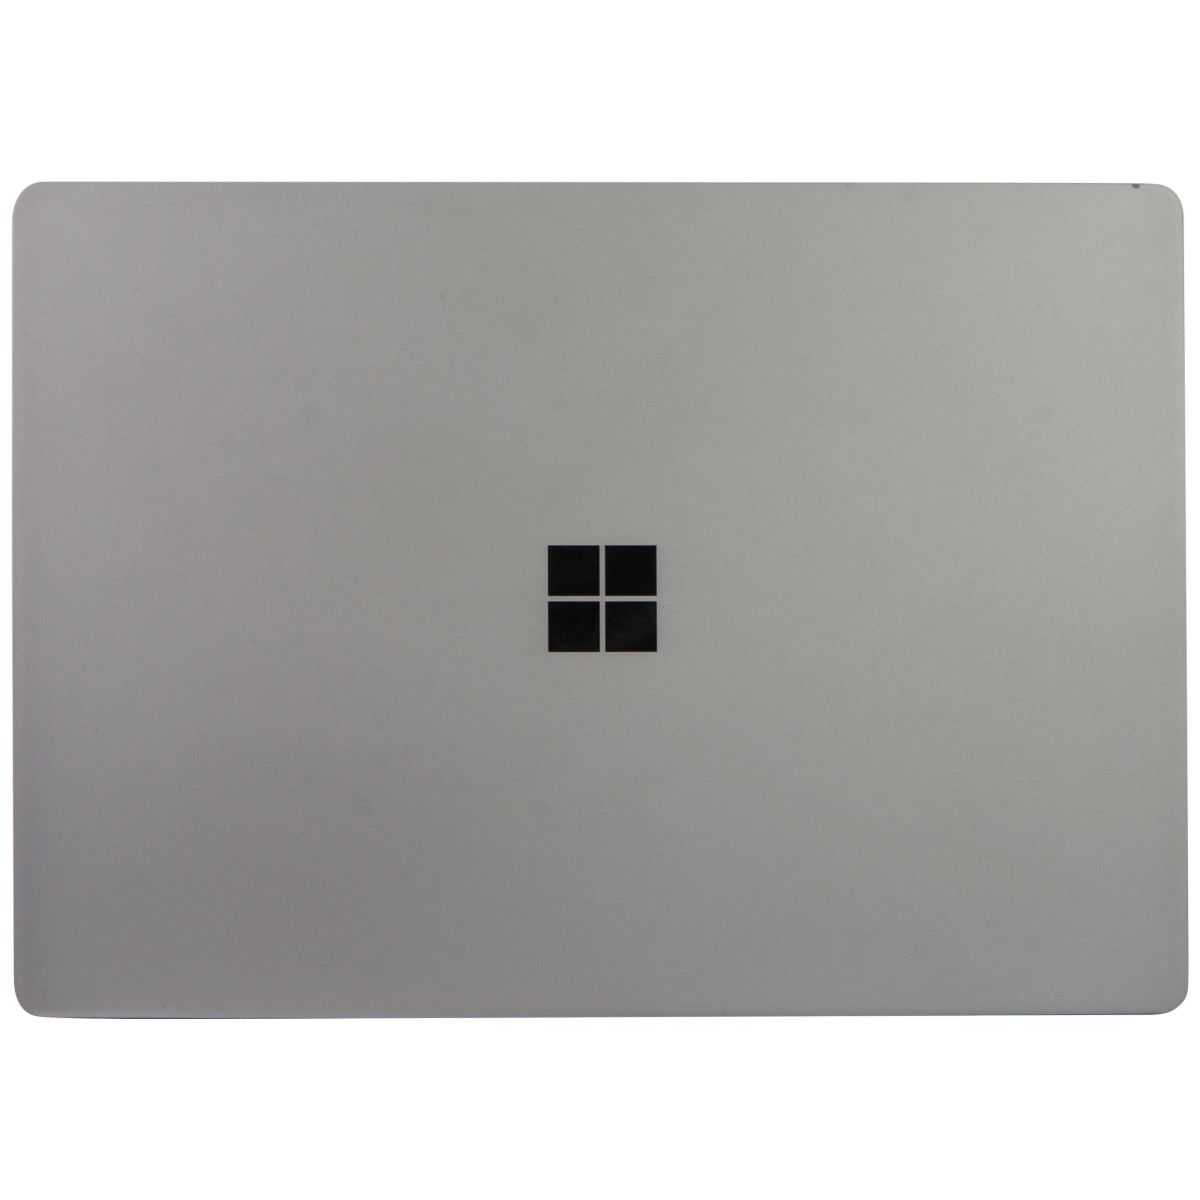 Microsoft Surface Laptop 2 (13.5-in) 1769 (i7-8650U / 1 TB / 16GB) - Platinum Laptops - PC Laptops & Netbooks Microsoft    - Simple Cell Bulk Wholesale Pricing - USA Seller